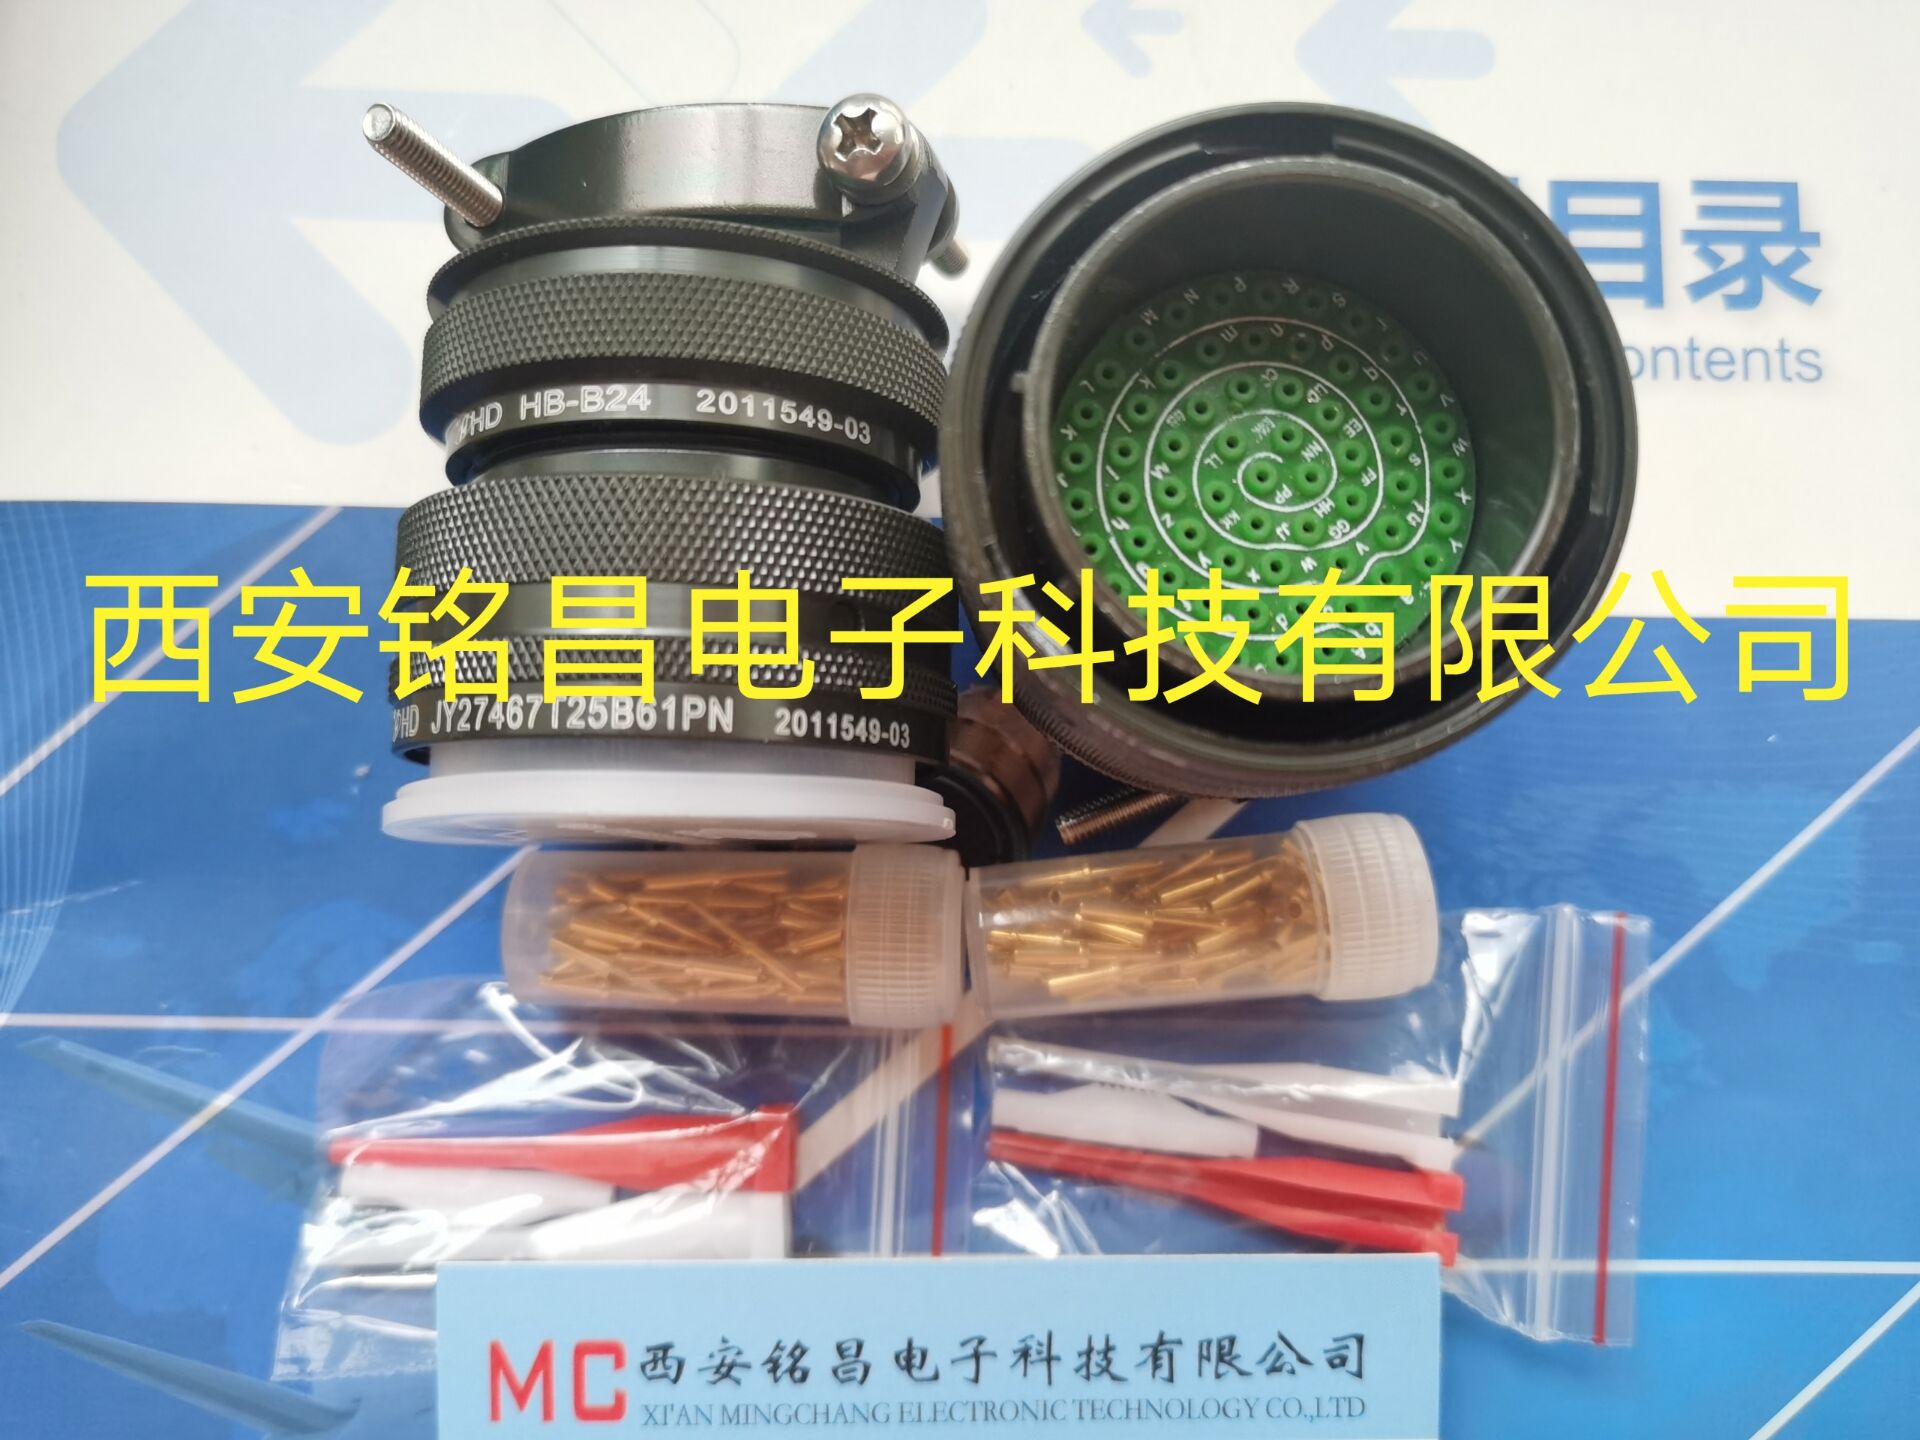 MCDZ西安铭昌销售JY27469E09B3CN-U圆形连接器-厂家直销